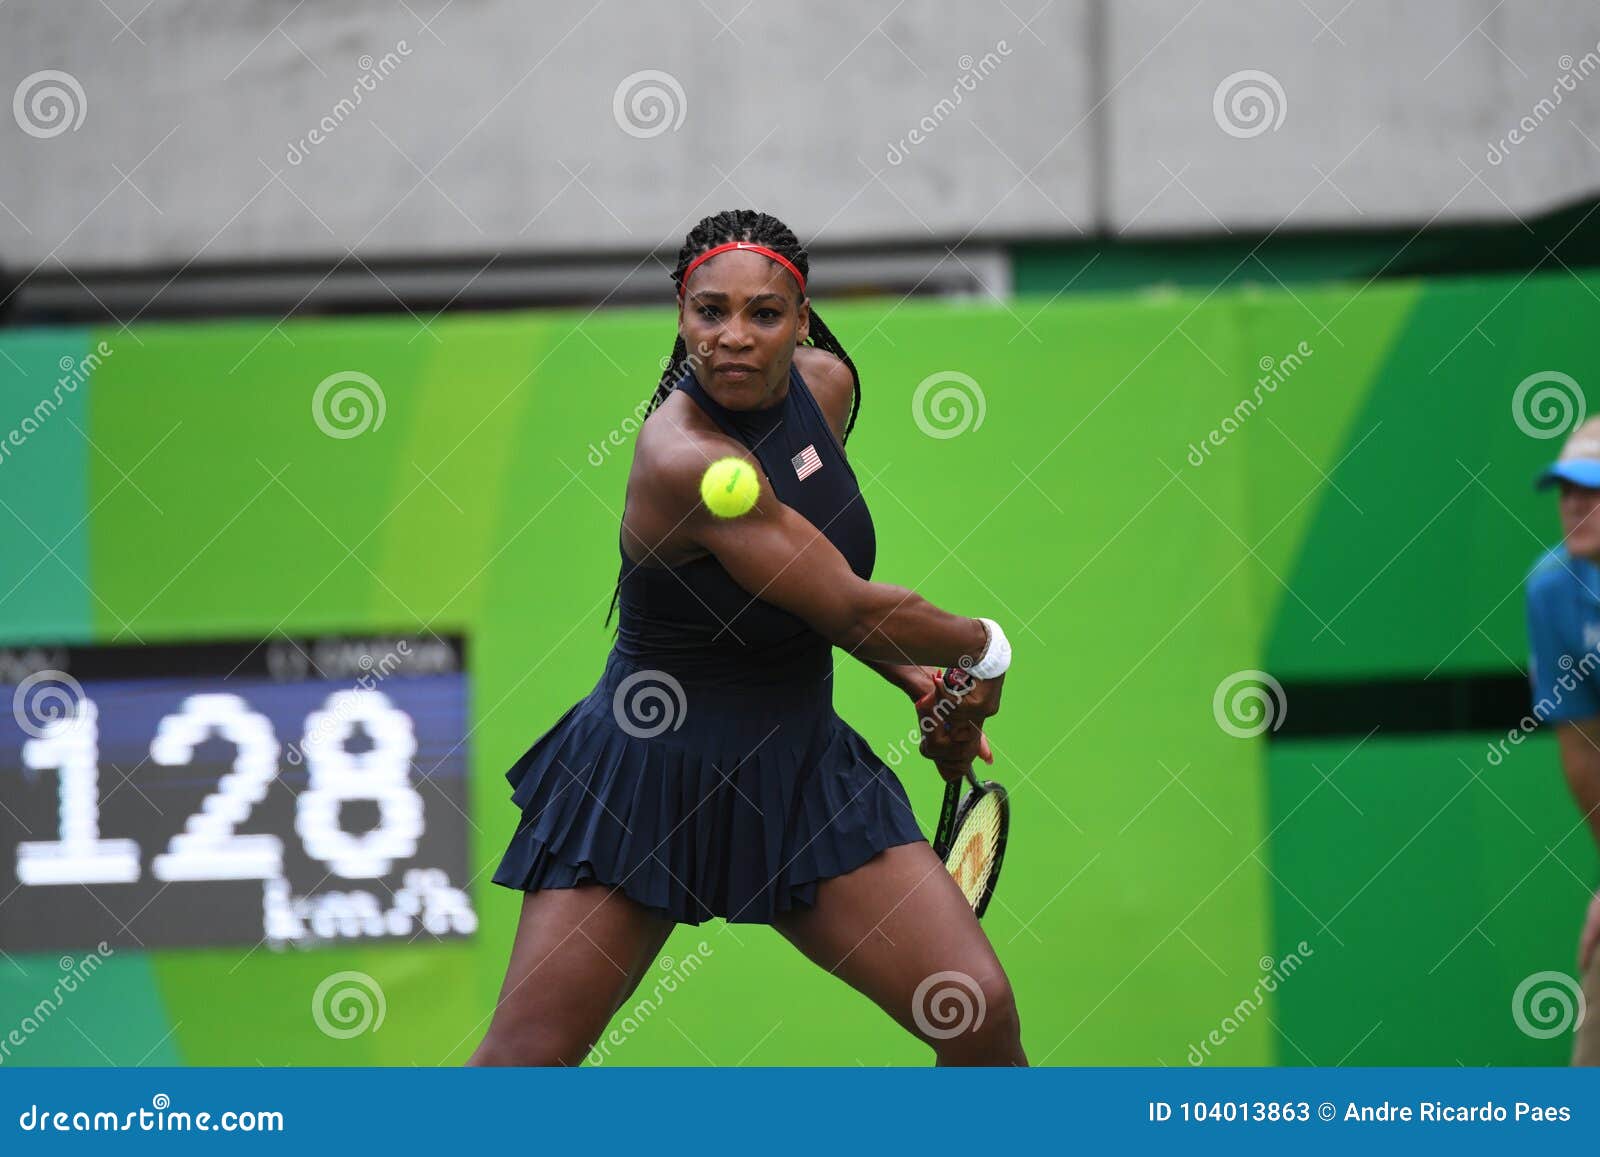 Tennis - Serena Williams photo stock éditorial. Image du gibier - 104013863